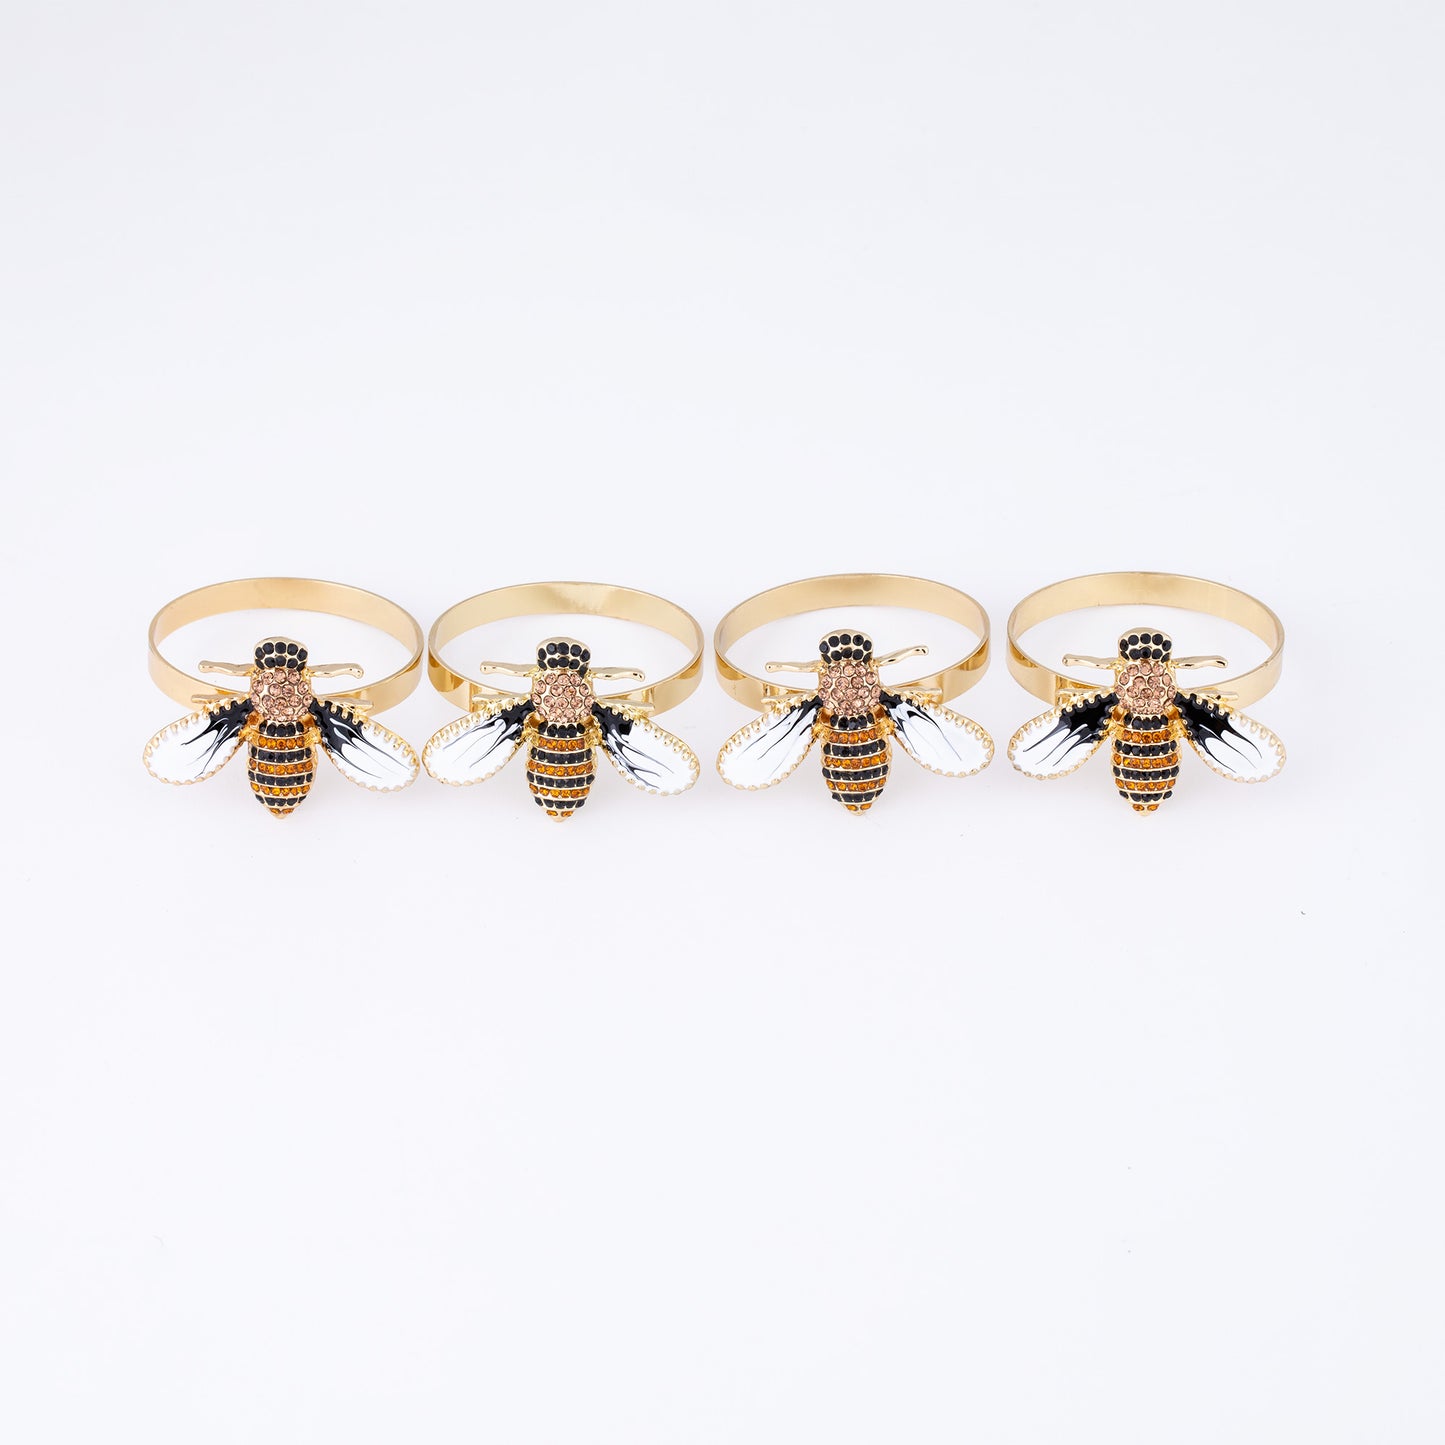 Elegant Bee Napkin Holder - Set of 4